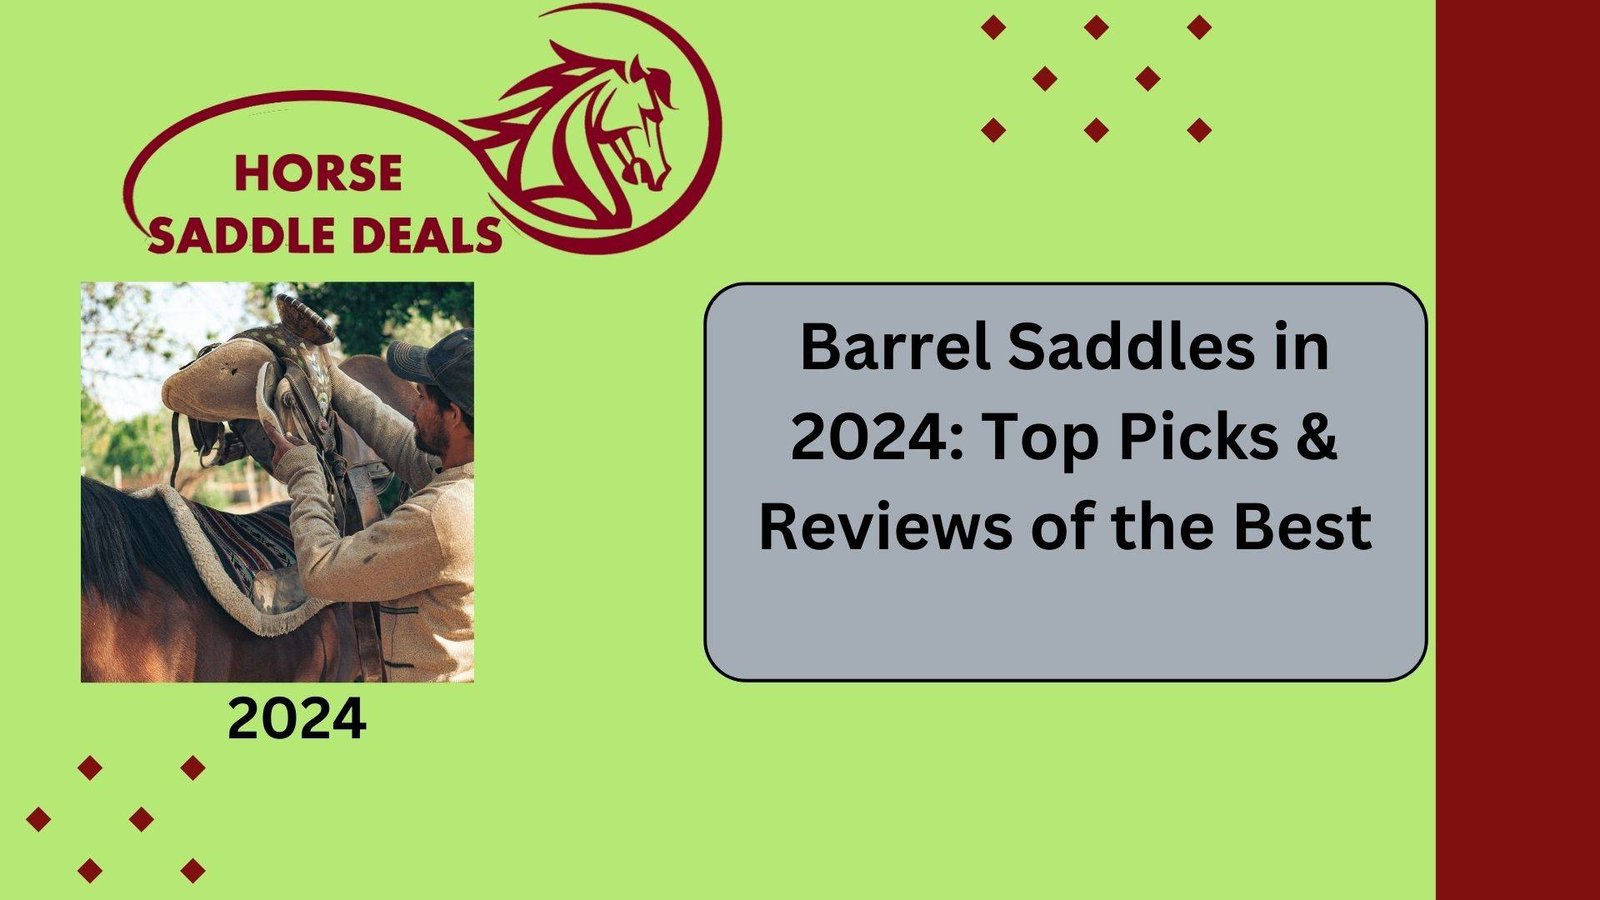 Barrel Saddles in 2024: Top Picks & Reviews of the Best